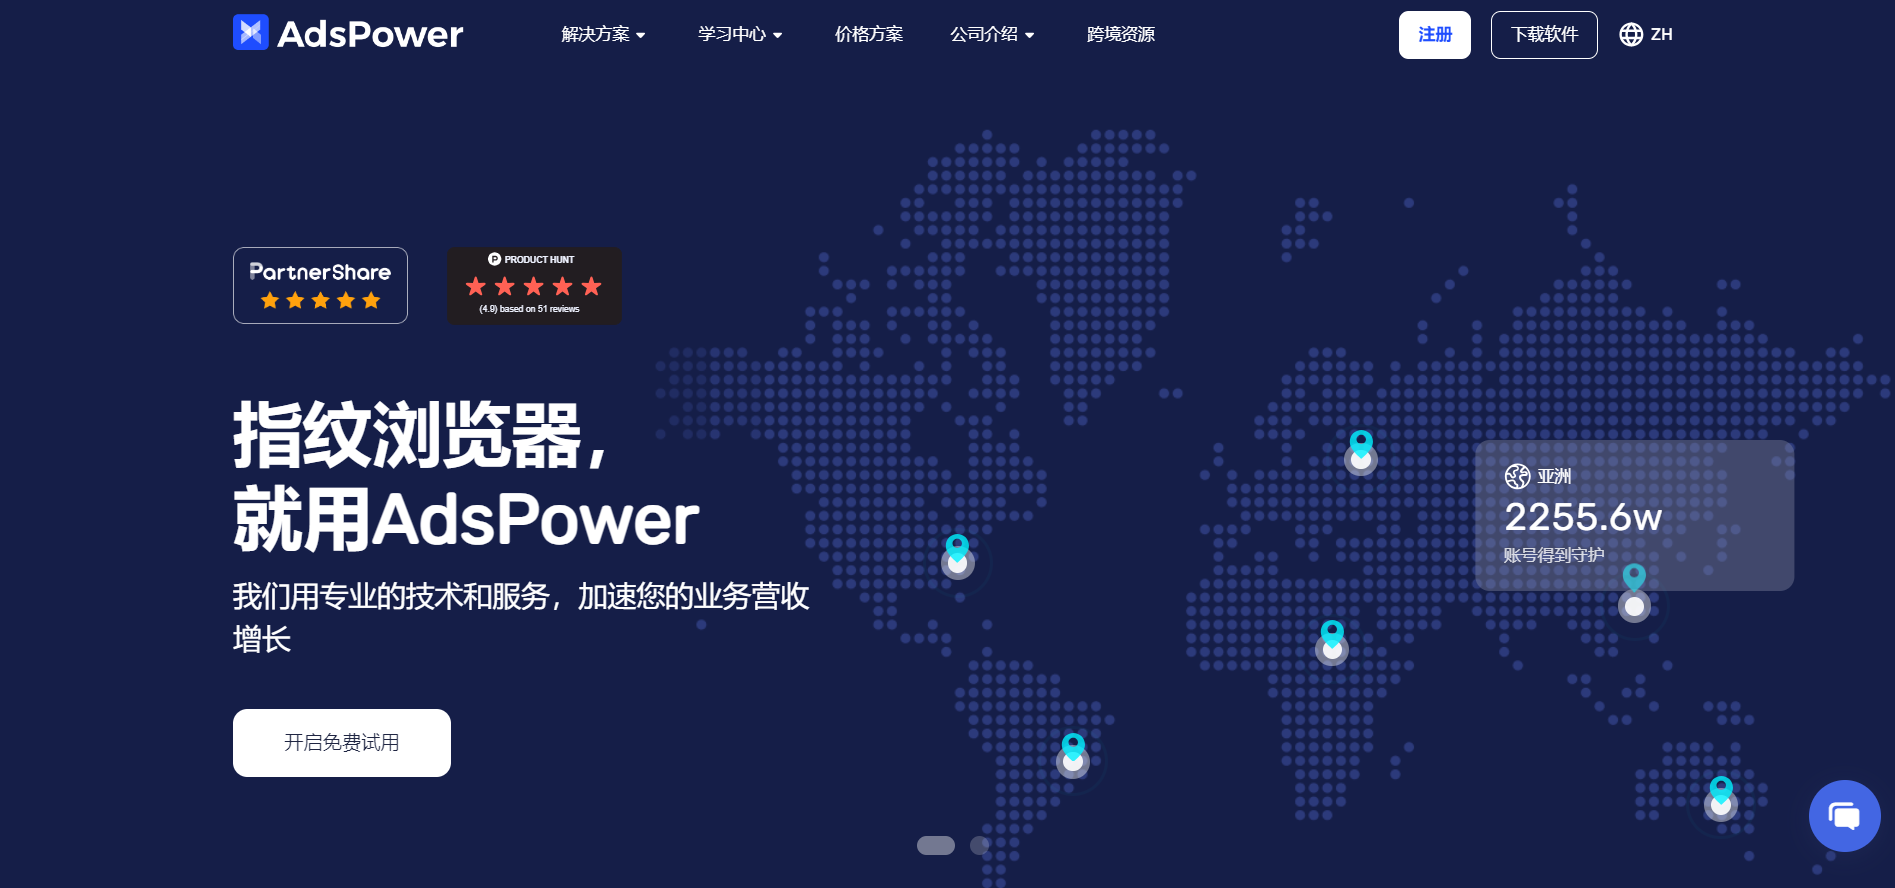 AdsPower指纹浏览器官网封面图